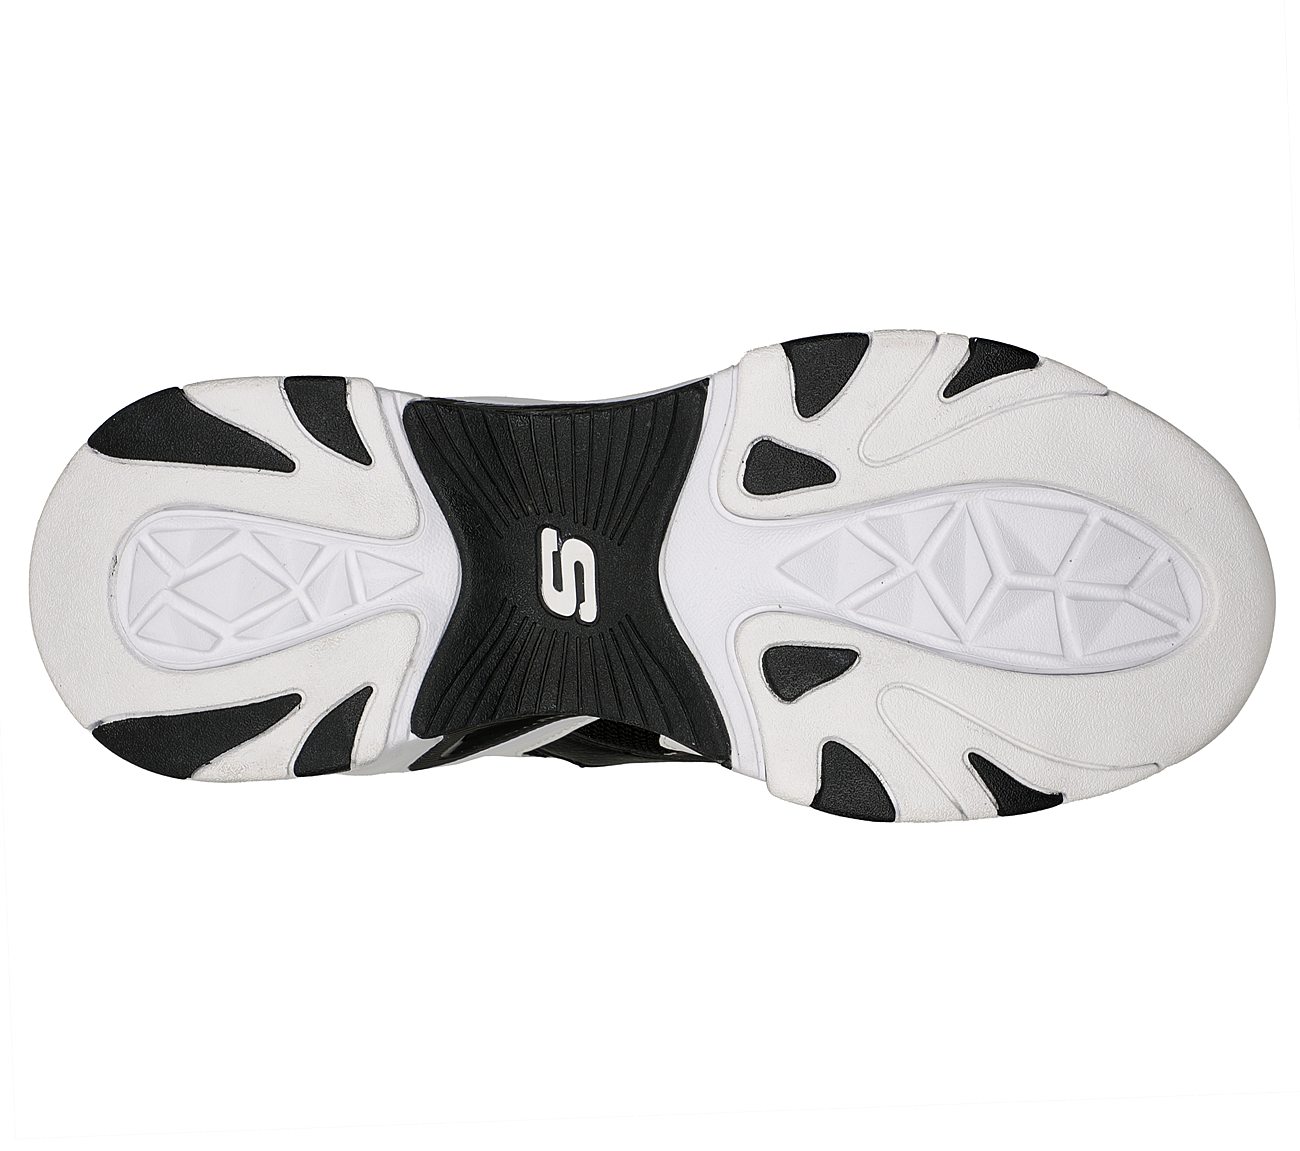 STAMINA V3, BLACK/WHITE Footwear Bottom View